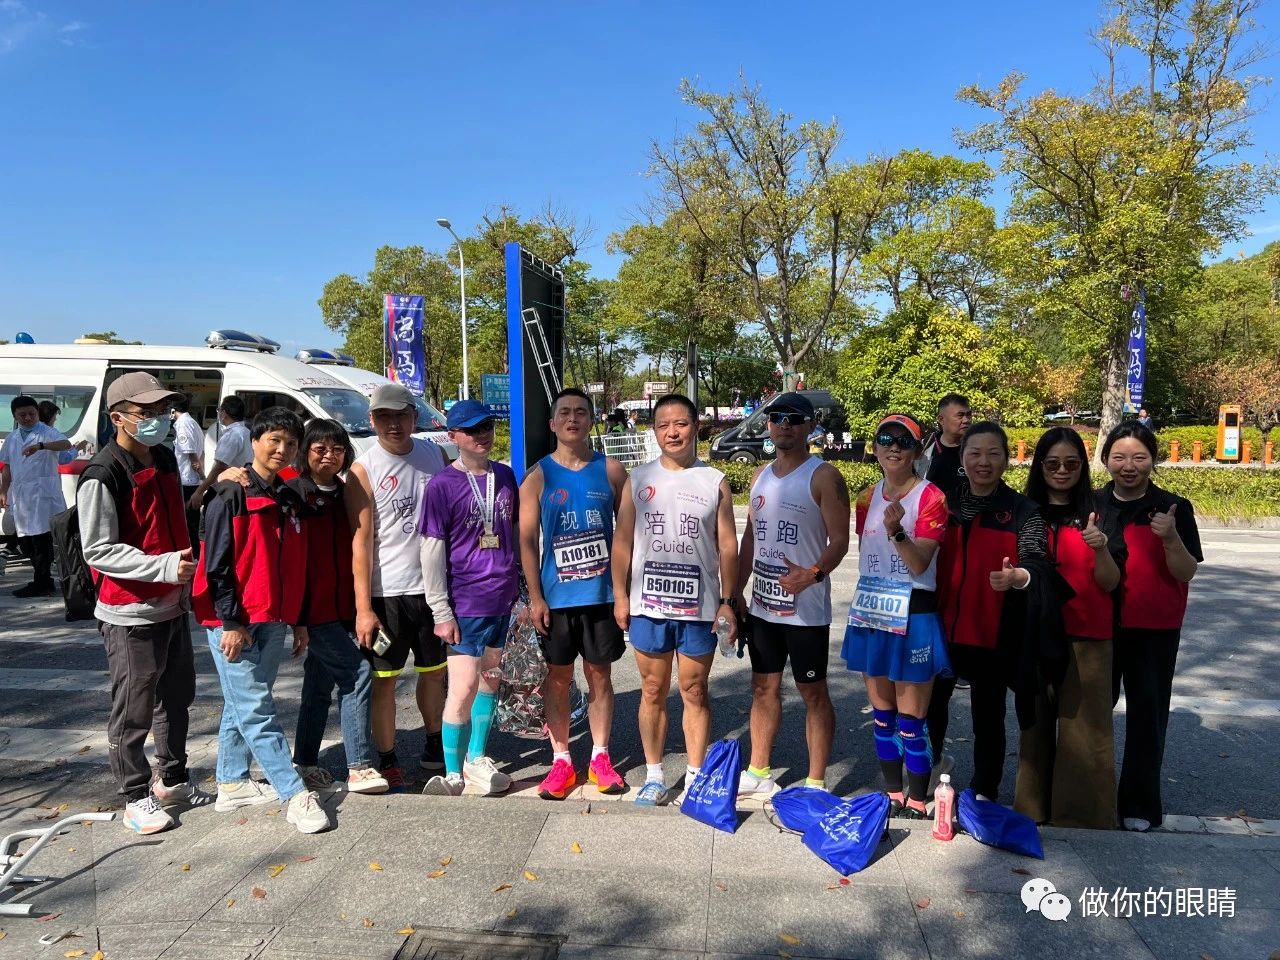 苏州蓝睛灵部分参赛队员及志愿者赛后合影 Participants and Volunteers of Suzhou Lanjingling After Race